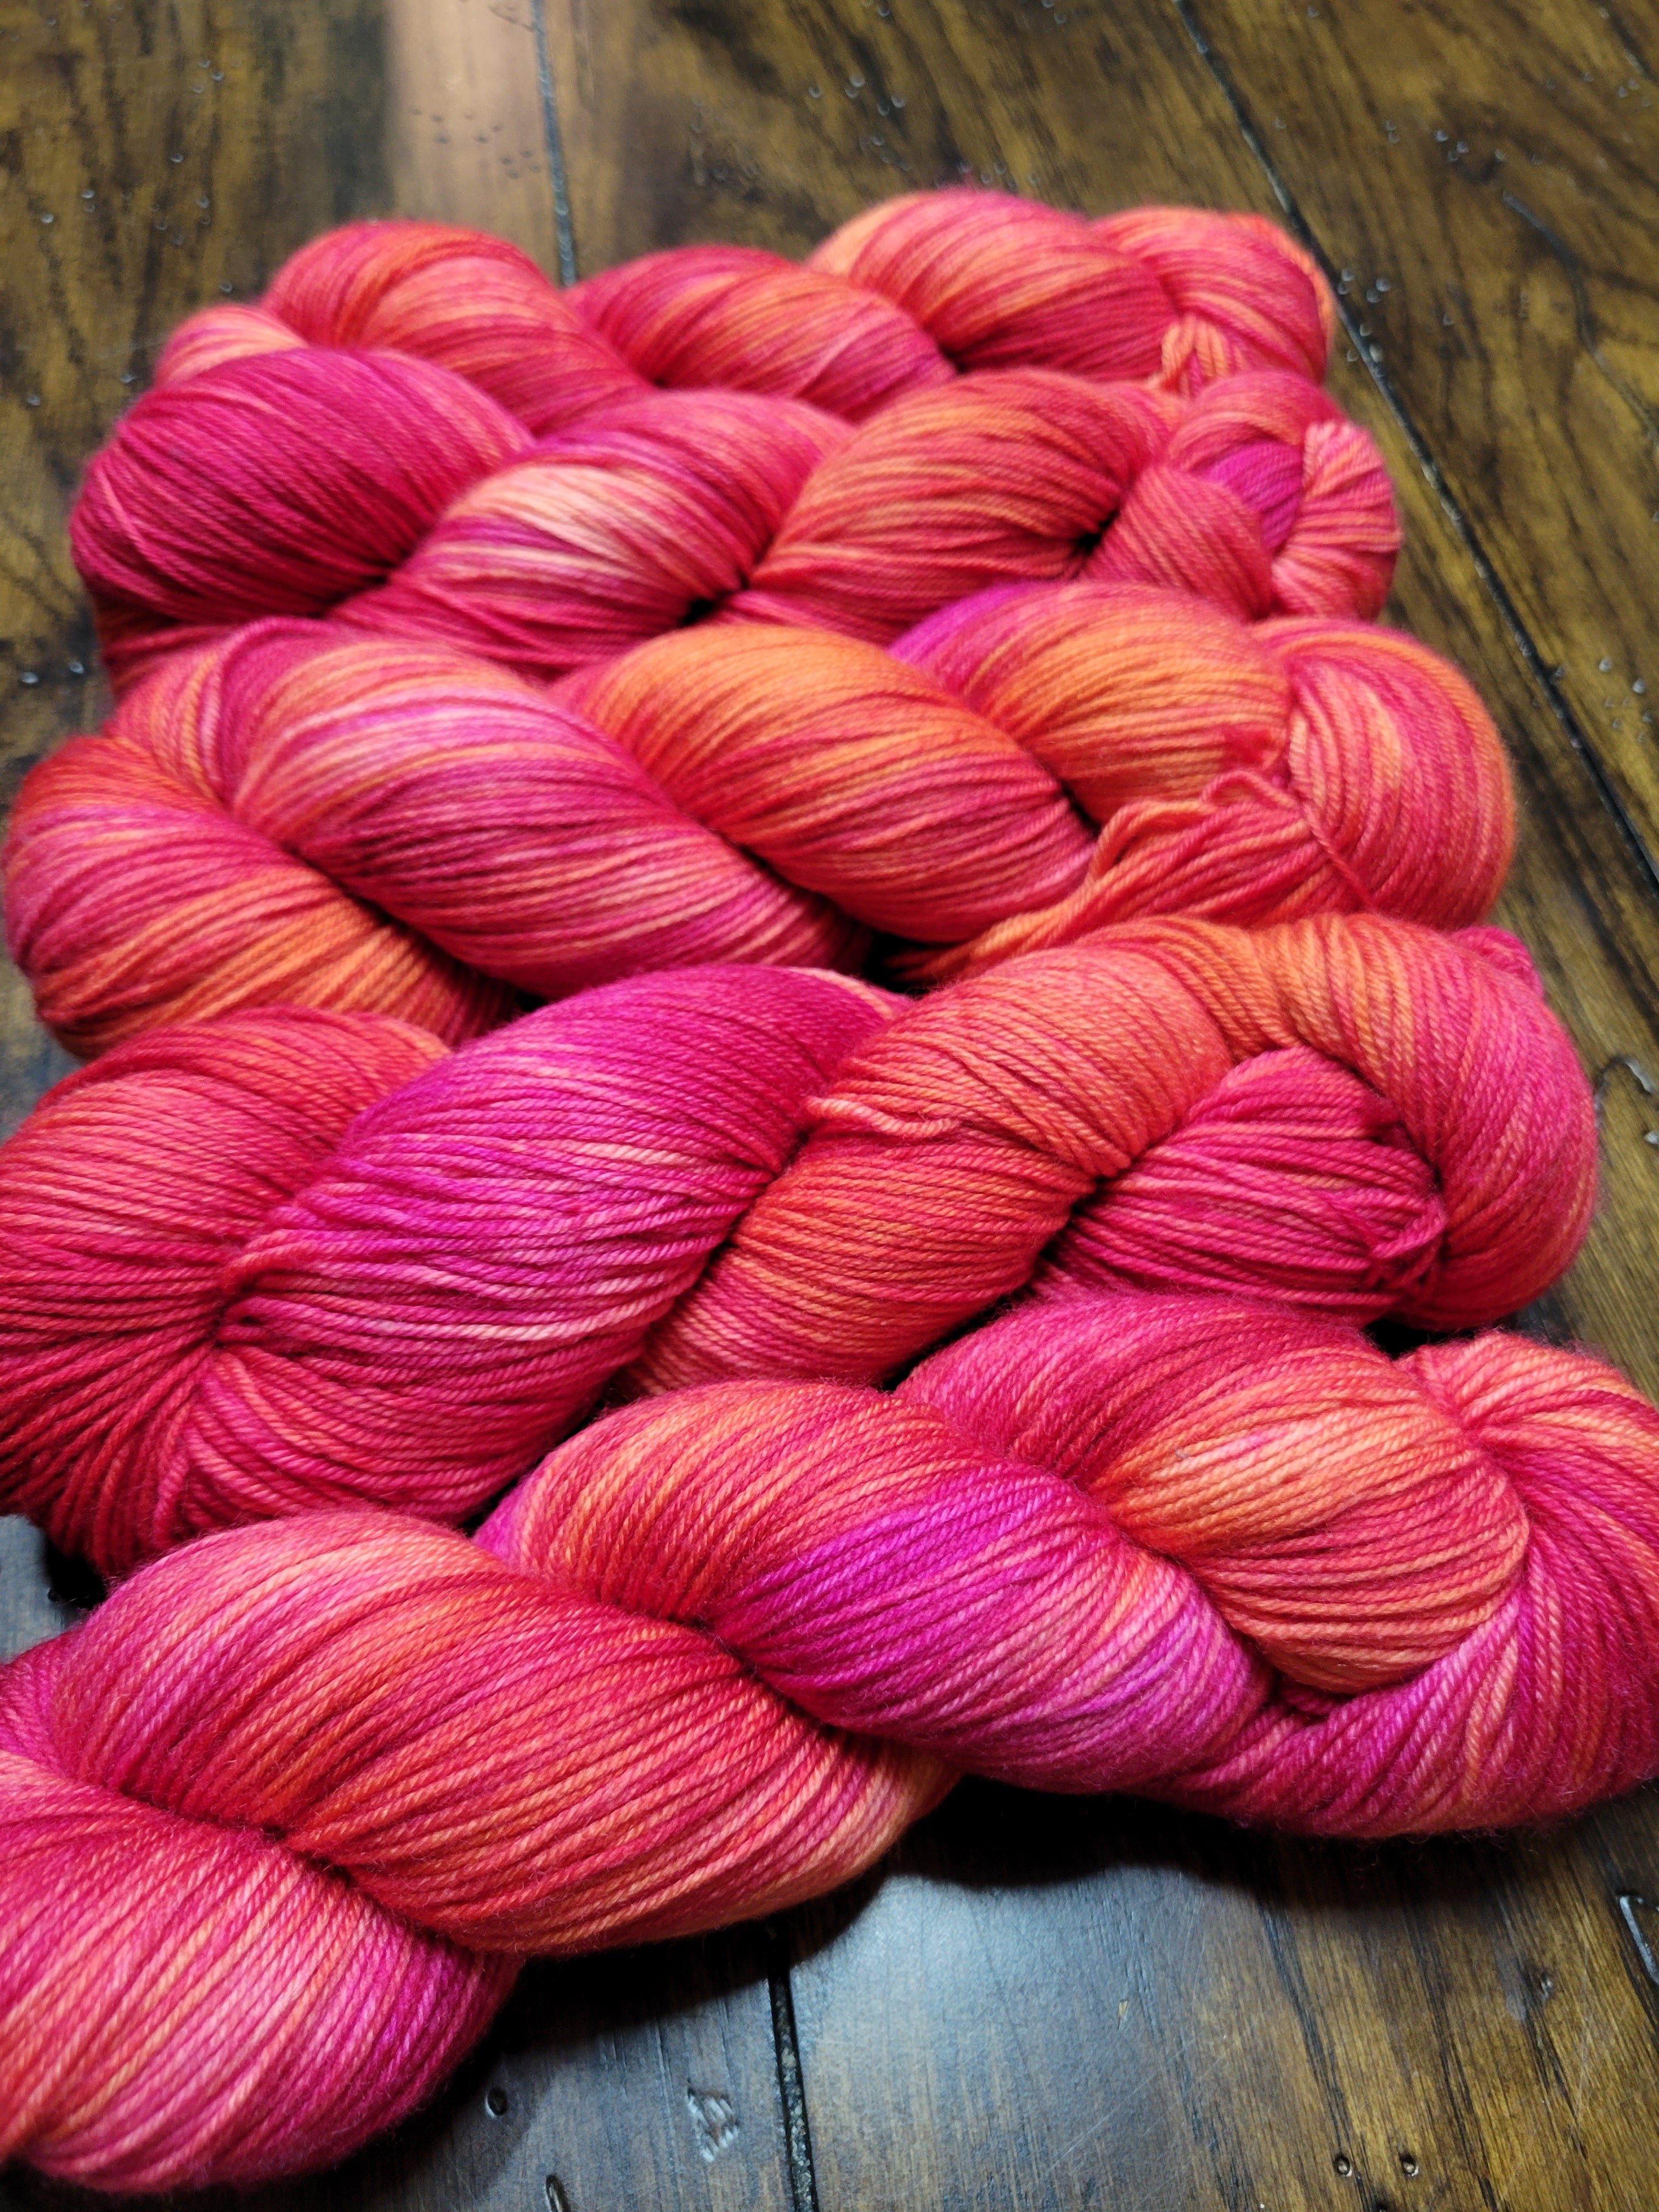 Hand-dyed Yarn @ Wonderland Yarns: OOAK Alice, DK